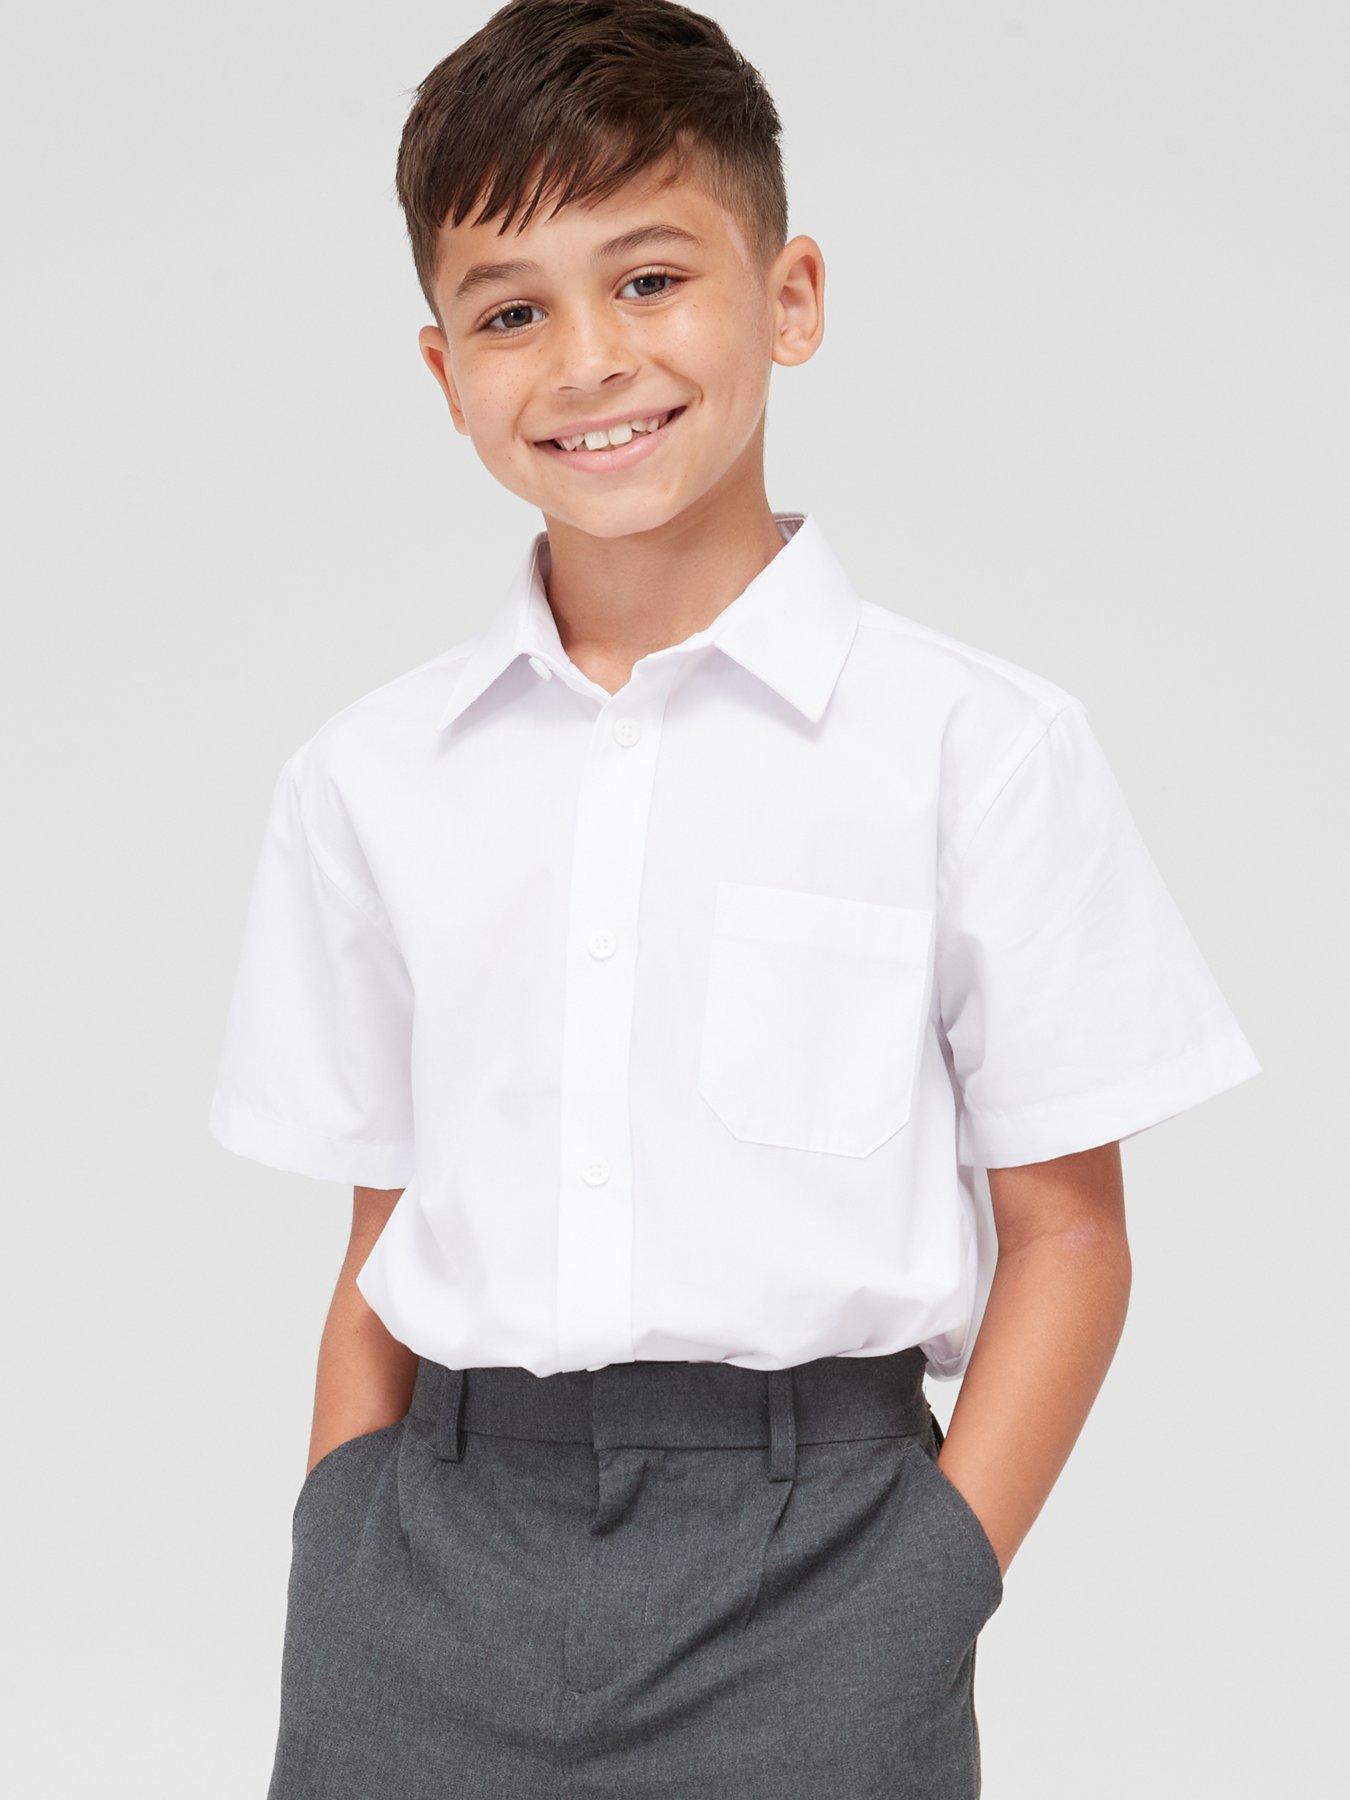  A2Z 4 Kids Cotton Rich 6 Pack Uniform School Tights